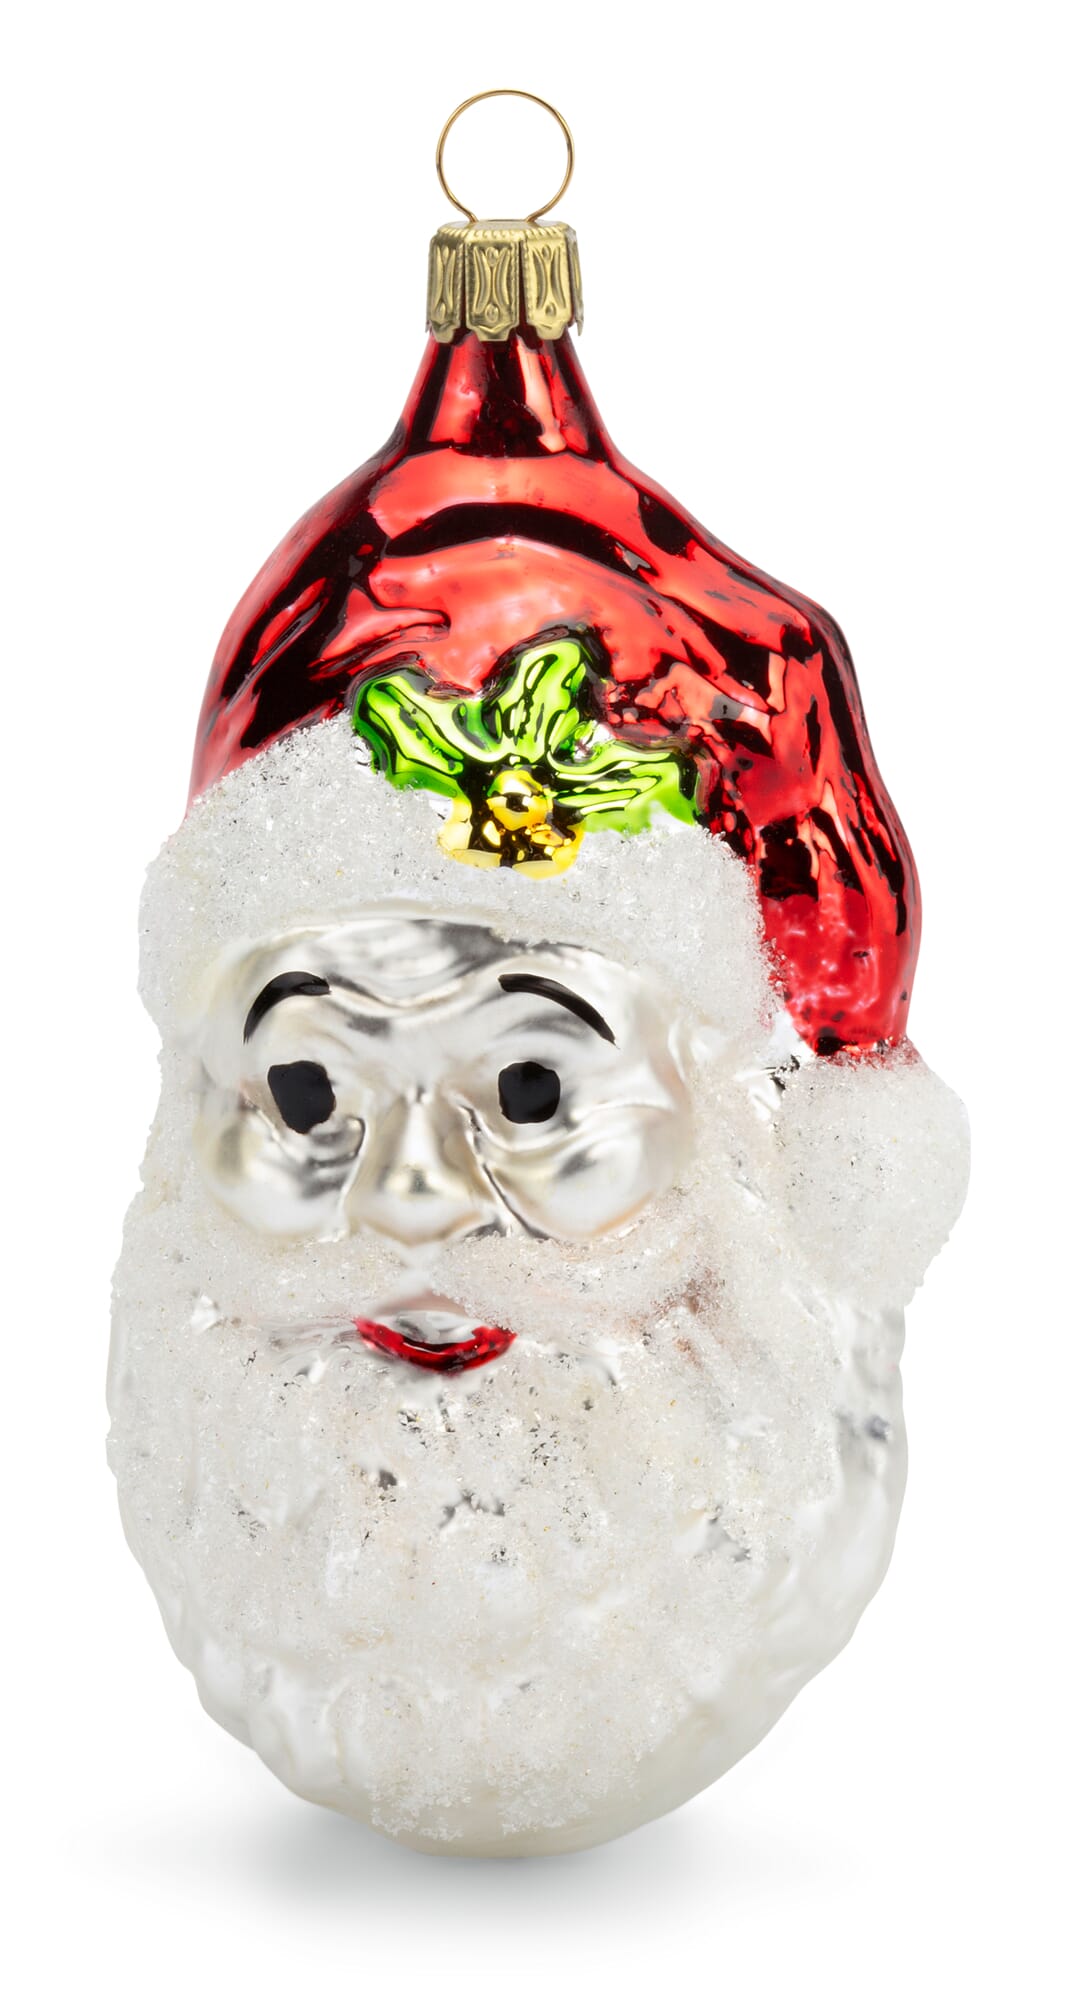 https://assets.manufactum.de/p/211/211207/211207_01.jpg/christmas-tree-ornaments-mouth-blown-santa-claus.jpg